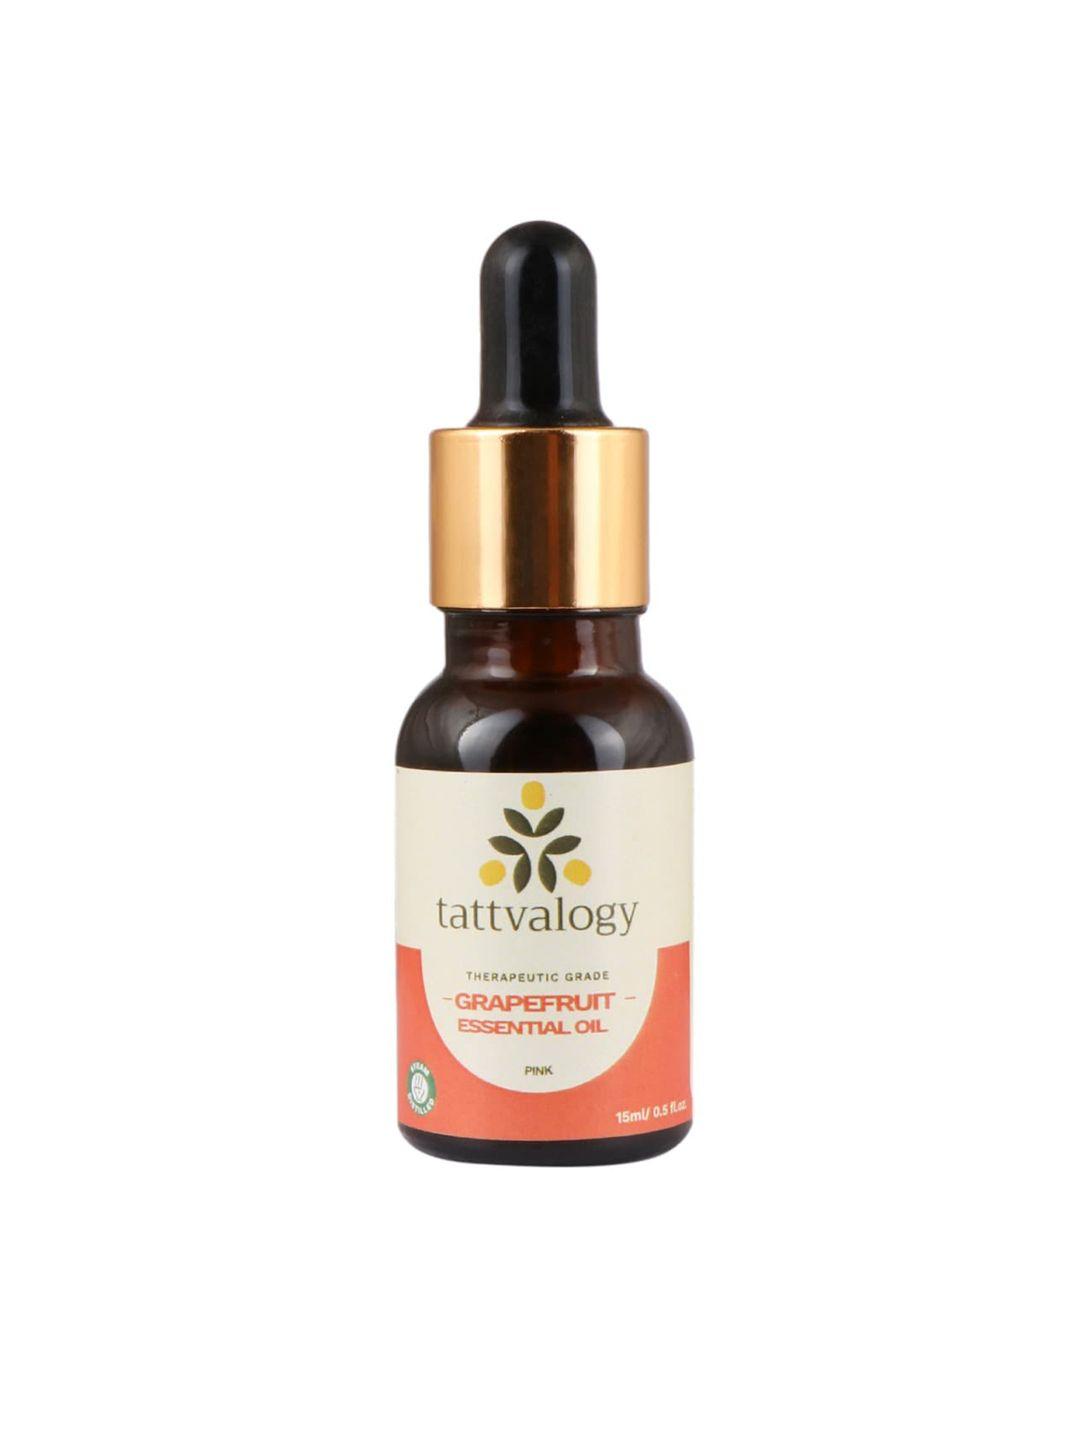 tattvalogy therapeutic grade pink grapefruit essential oil - 15 ml